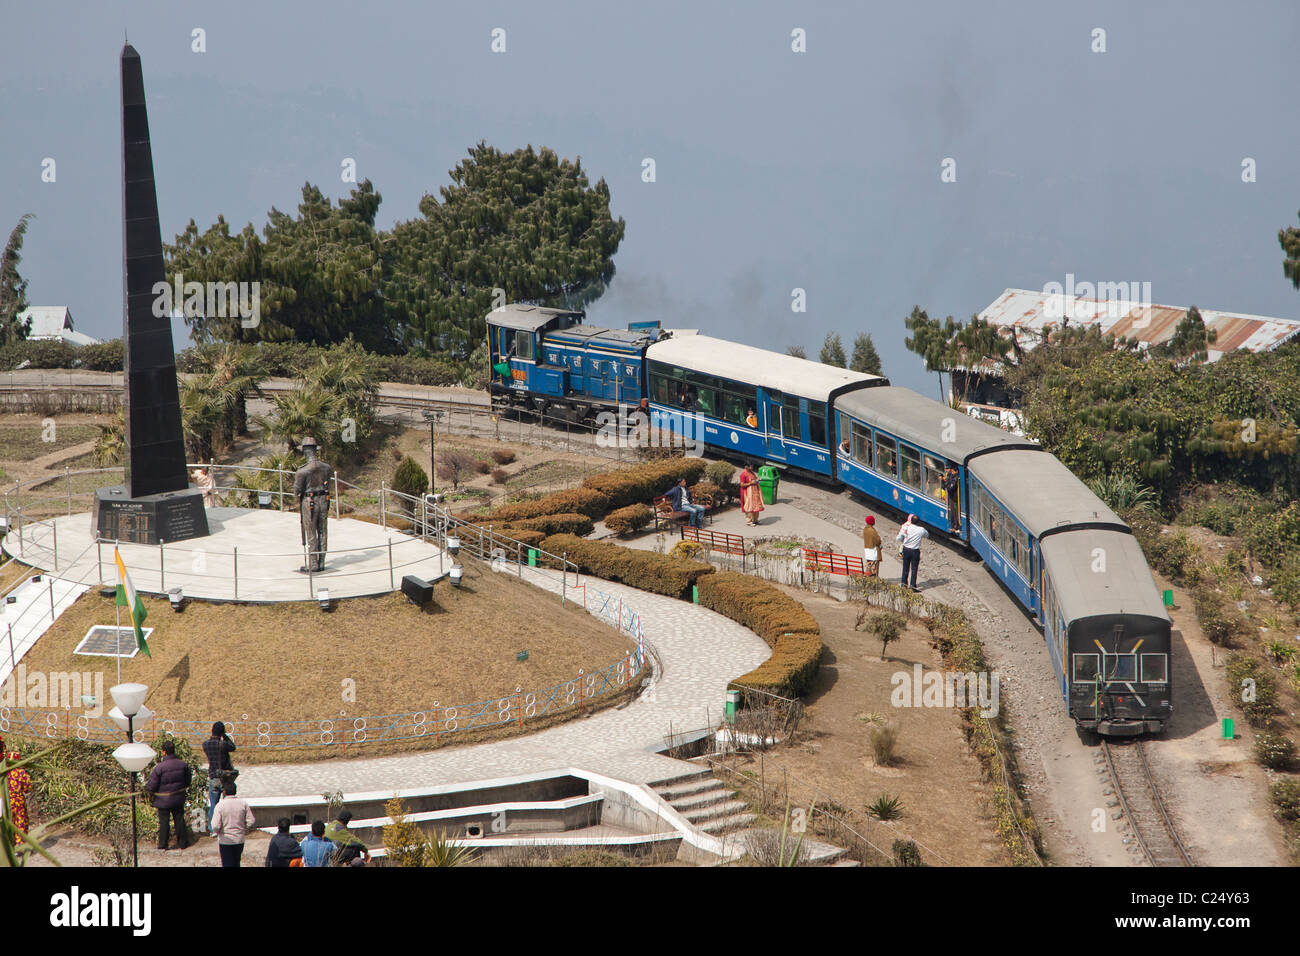 The toy train passes through Batasia loop and the war memorial in Darjeeling, West Bengal, India. Stock Photo